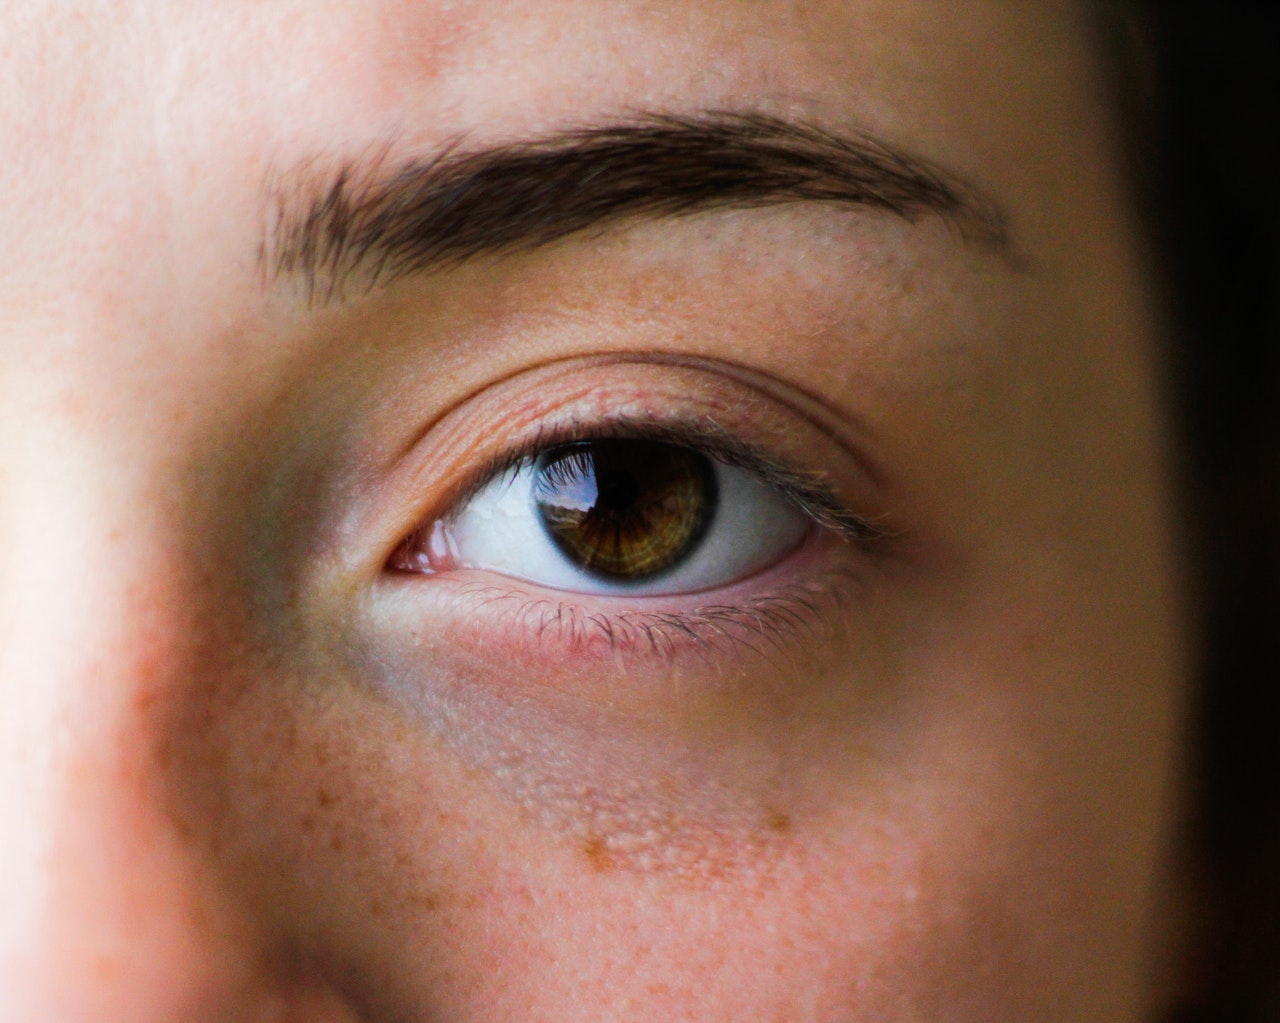 Close-up of a woman's eye. Image courtesy of Brianna Amick via Pexels